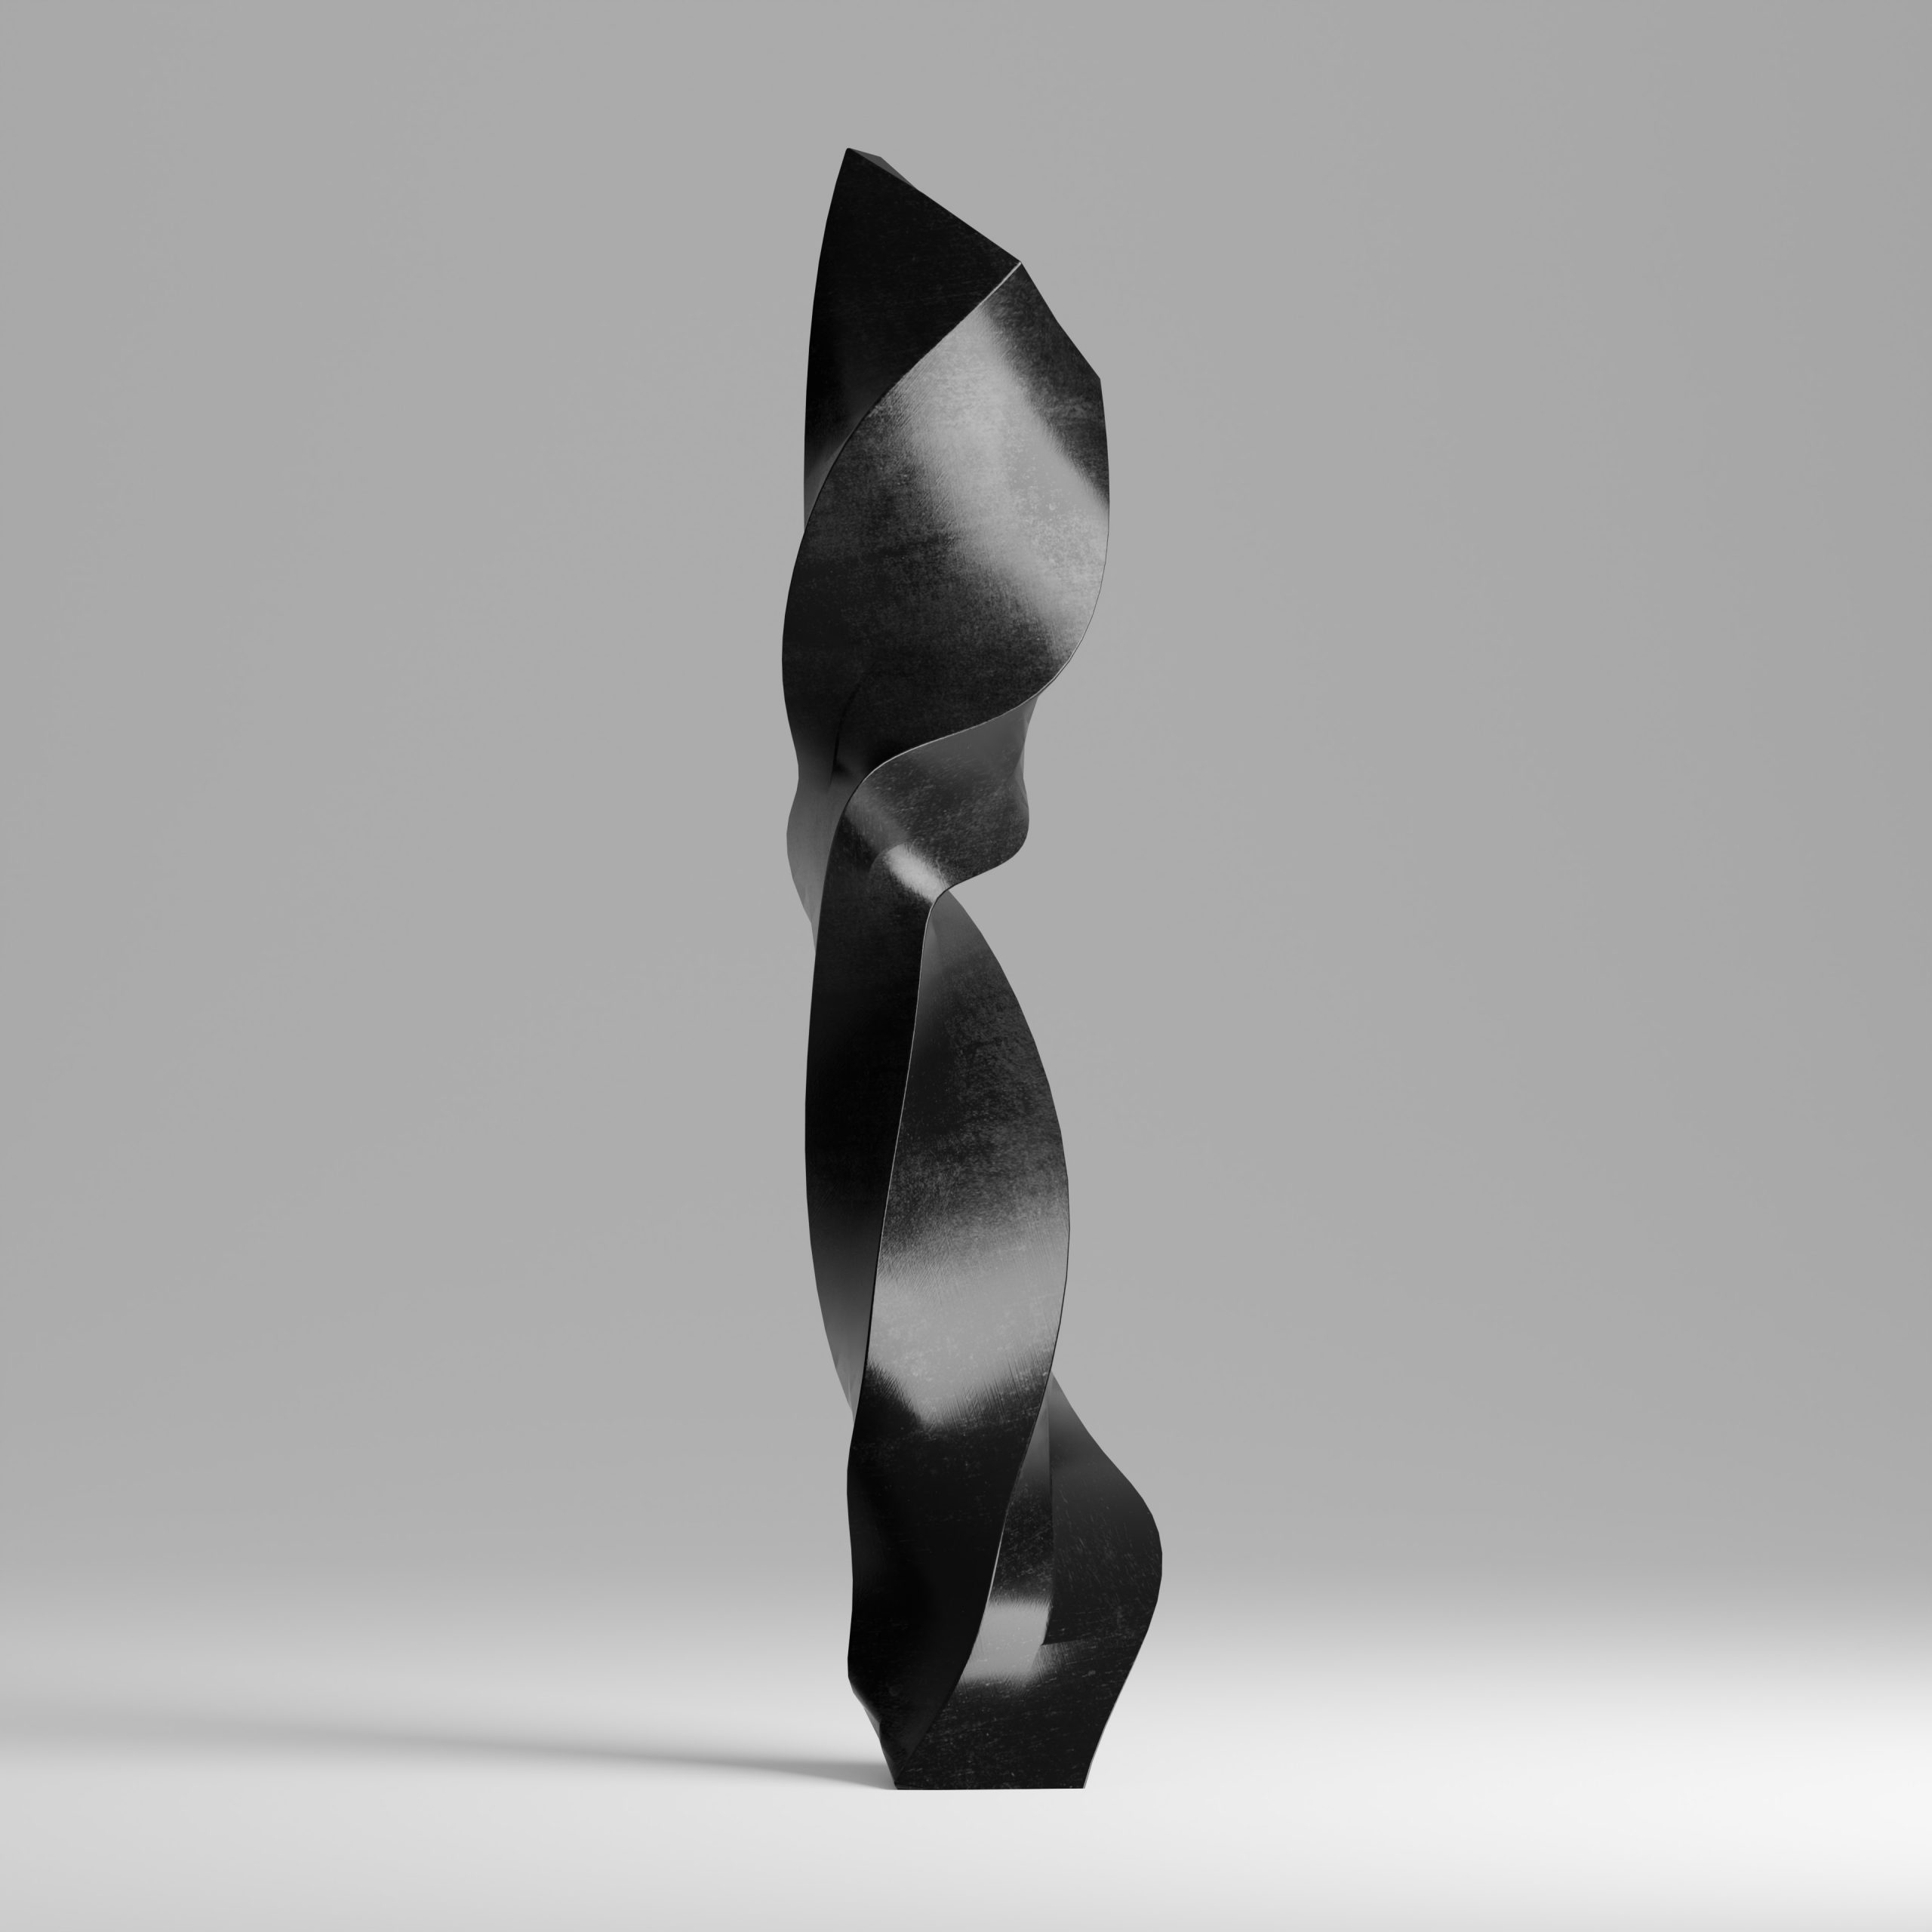 Steel Sculpture Twisted